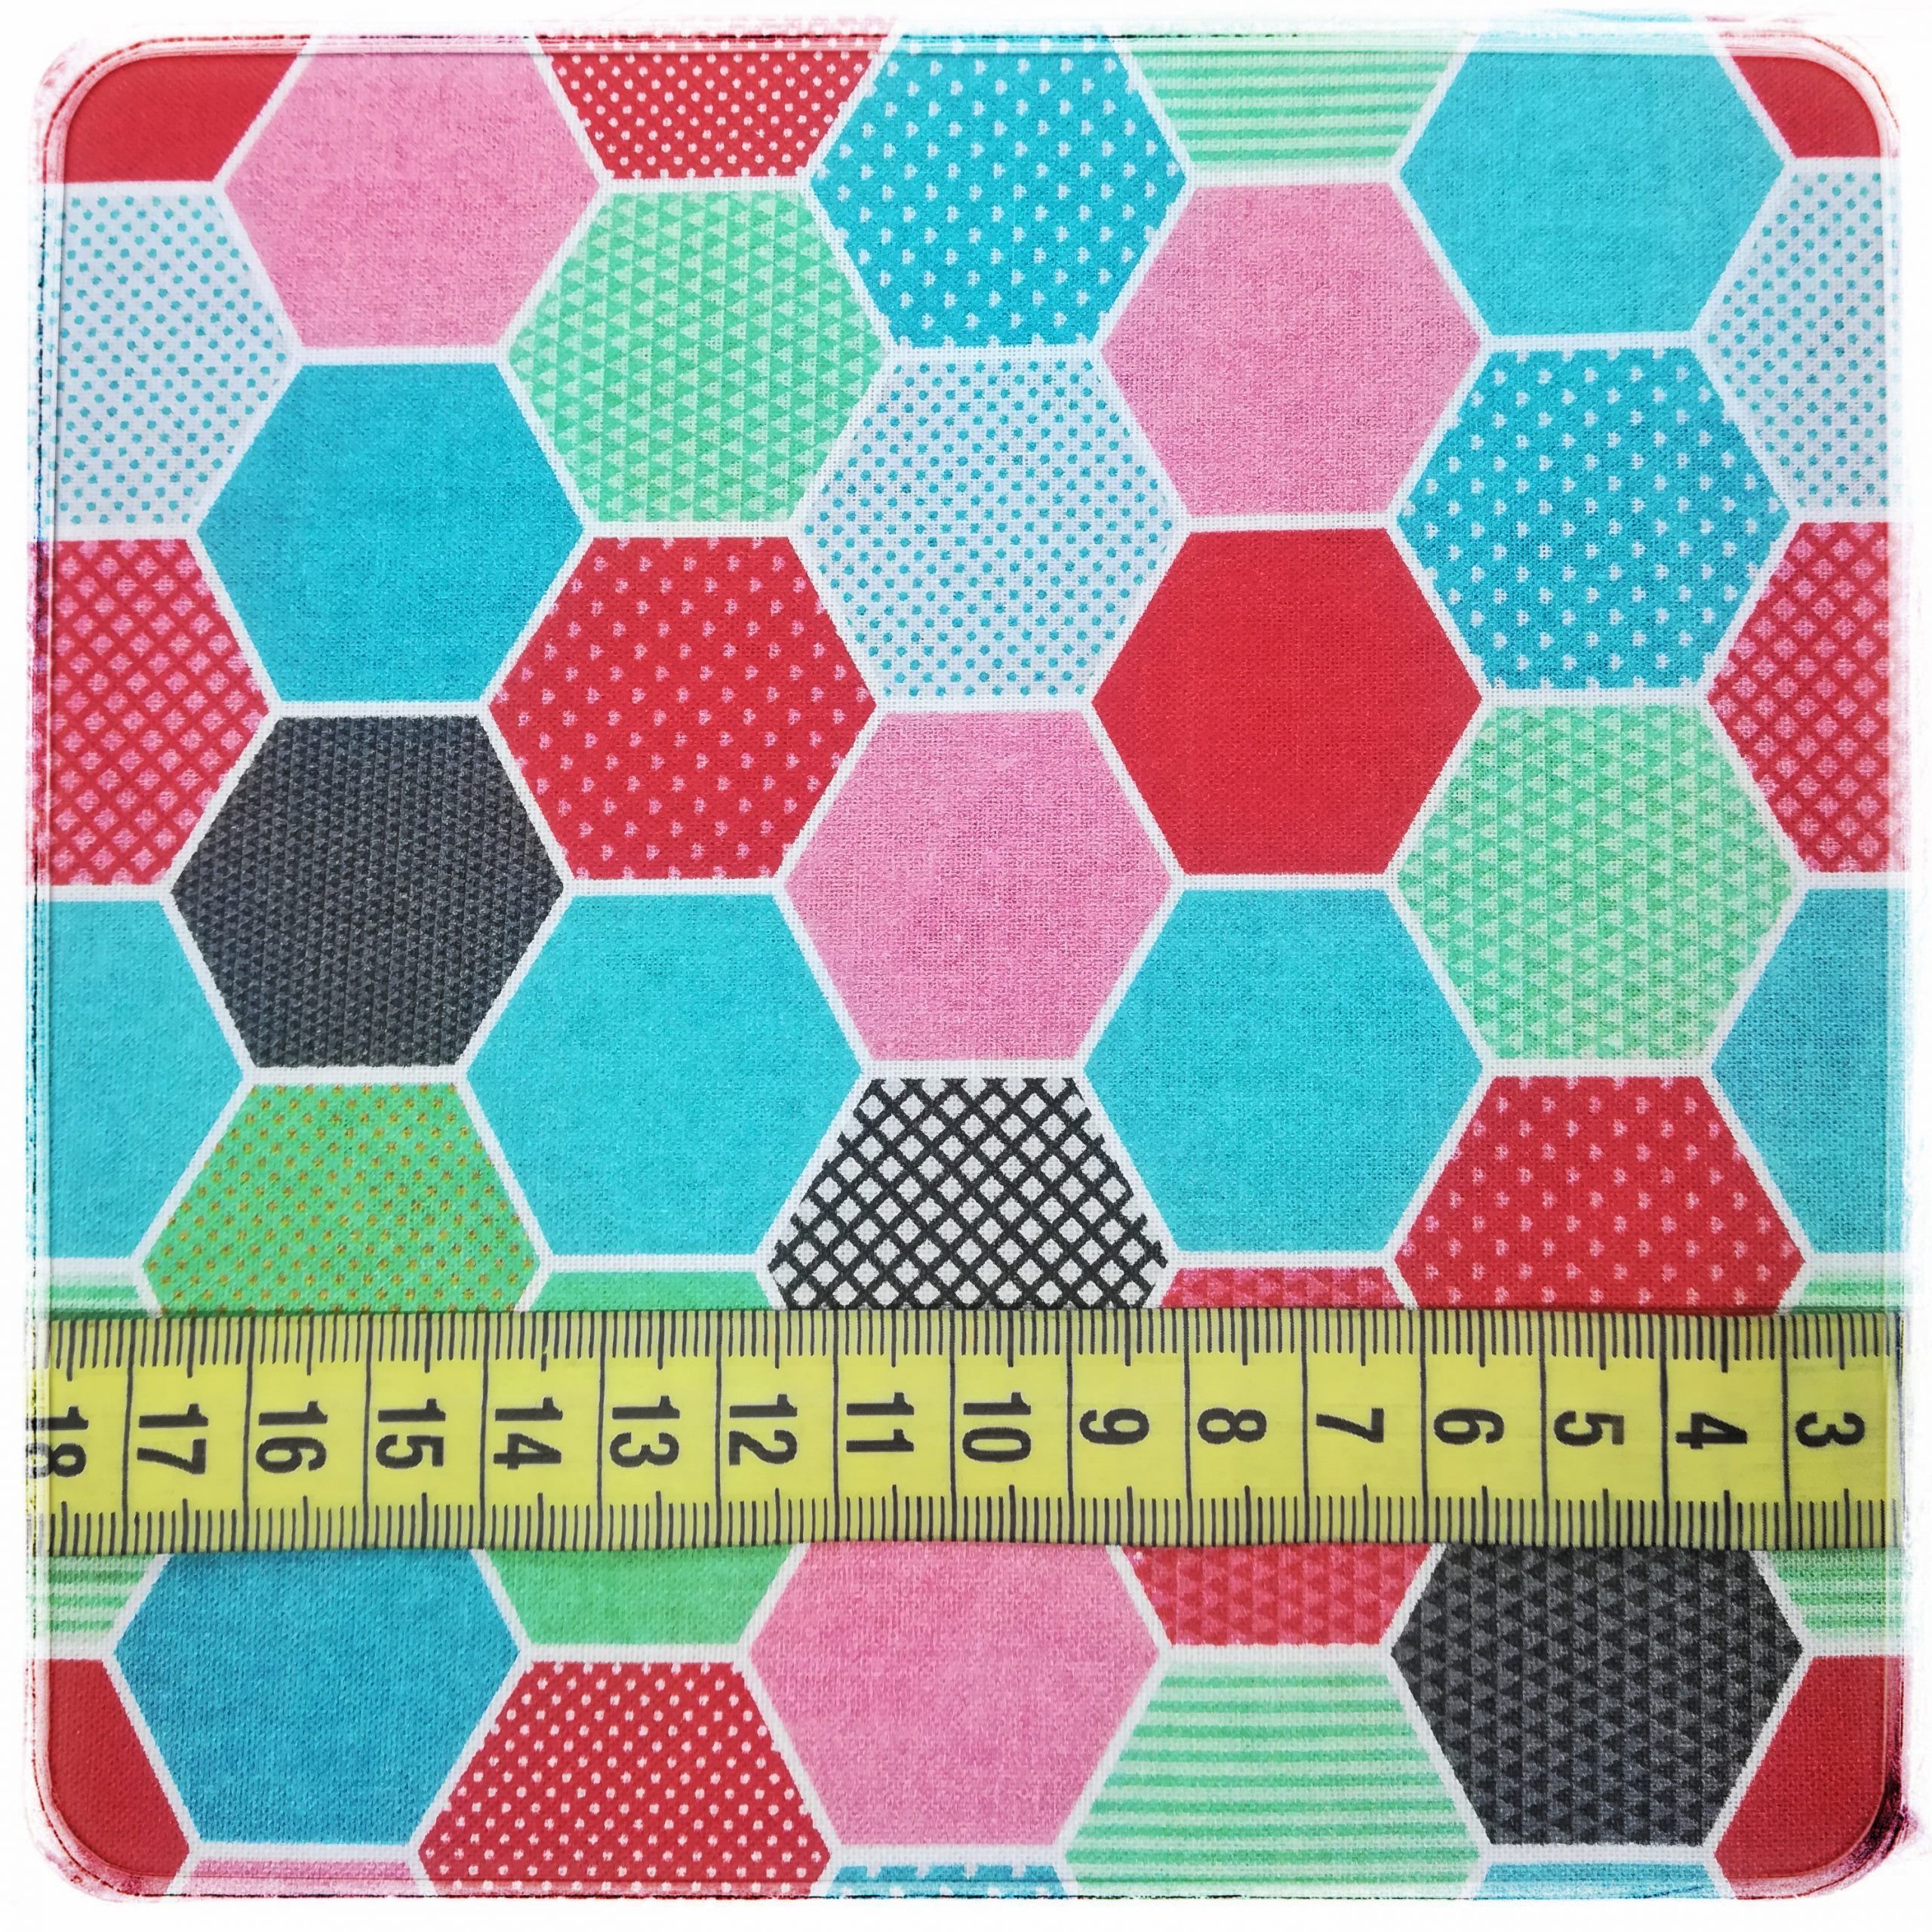 medidas tela patchwork hexagonos